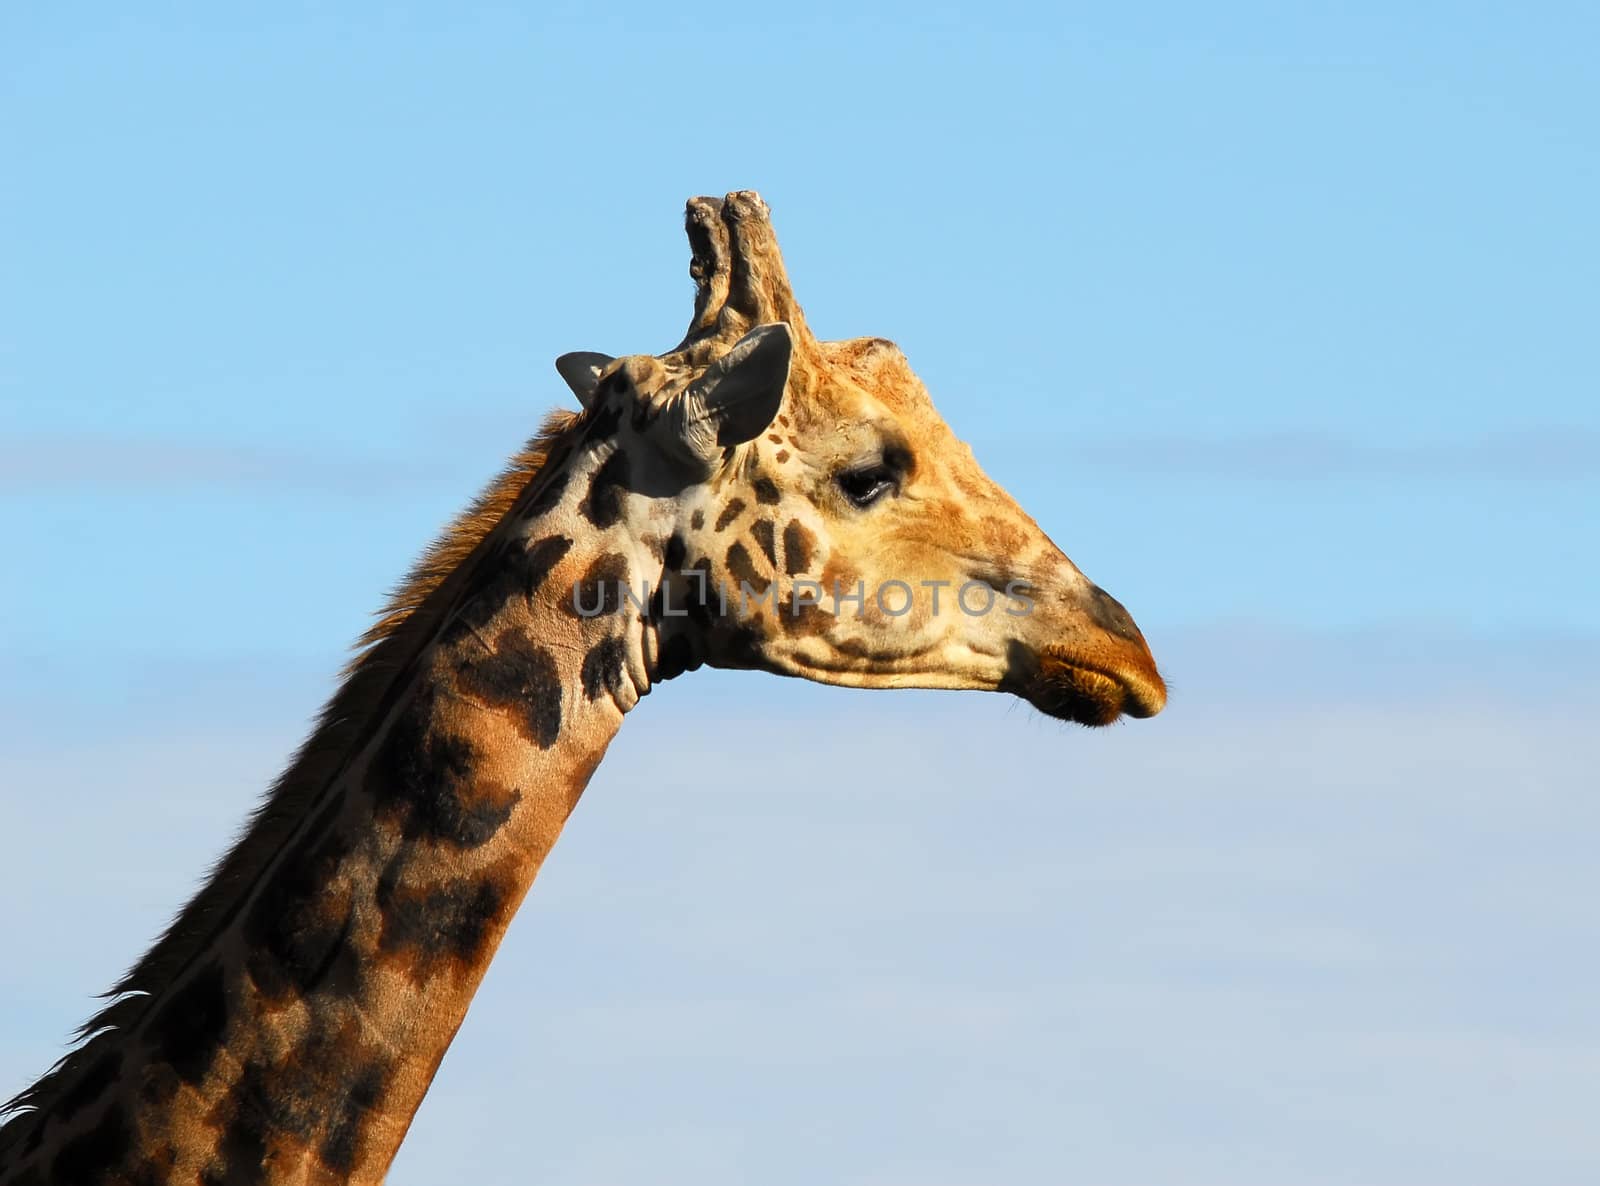 Giraffe (Giraffa camelopardalis) by nialat